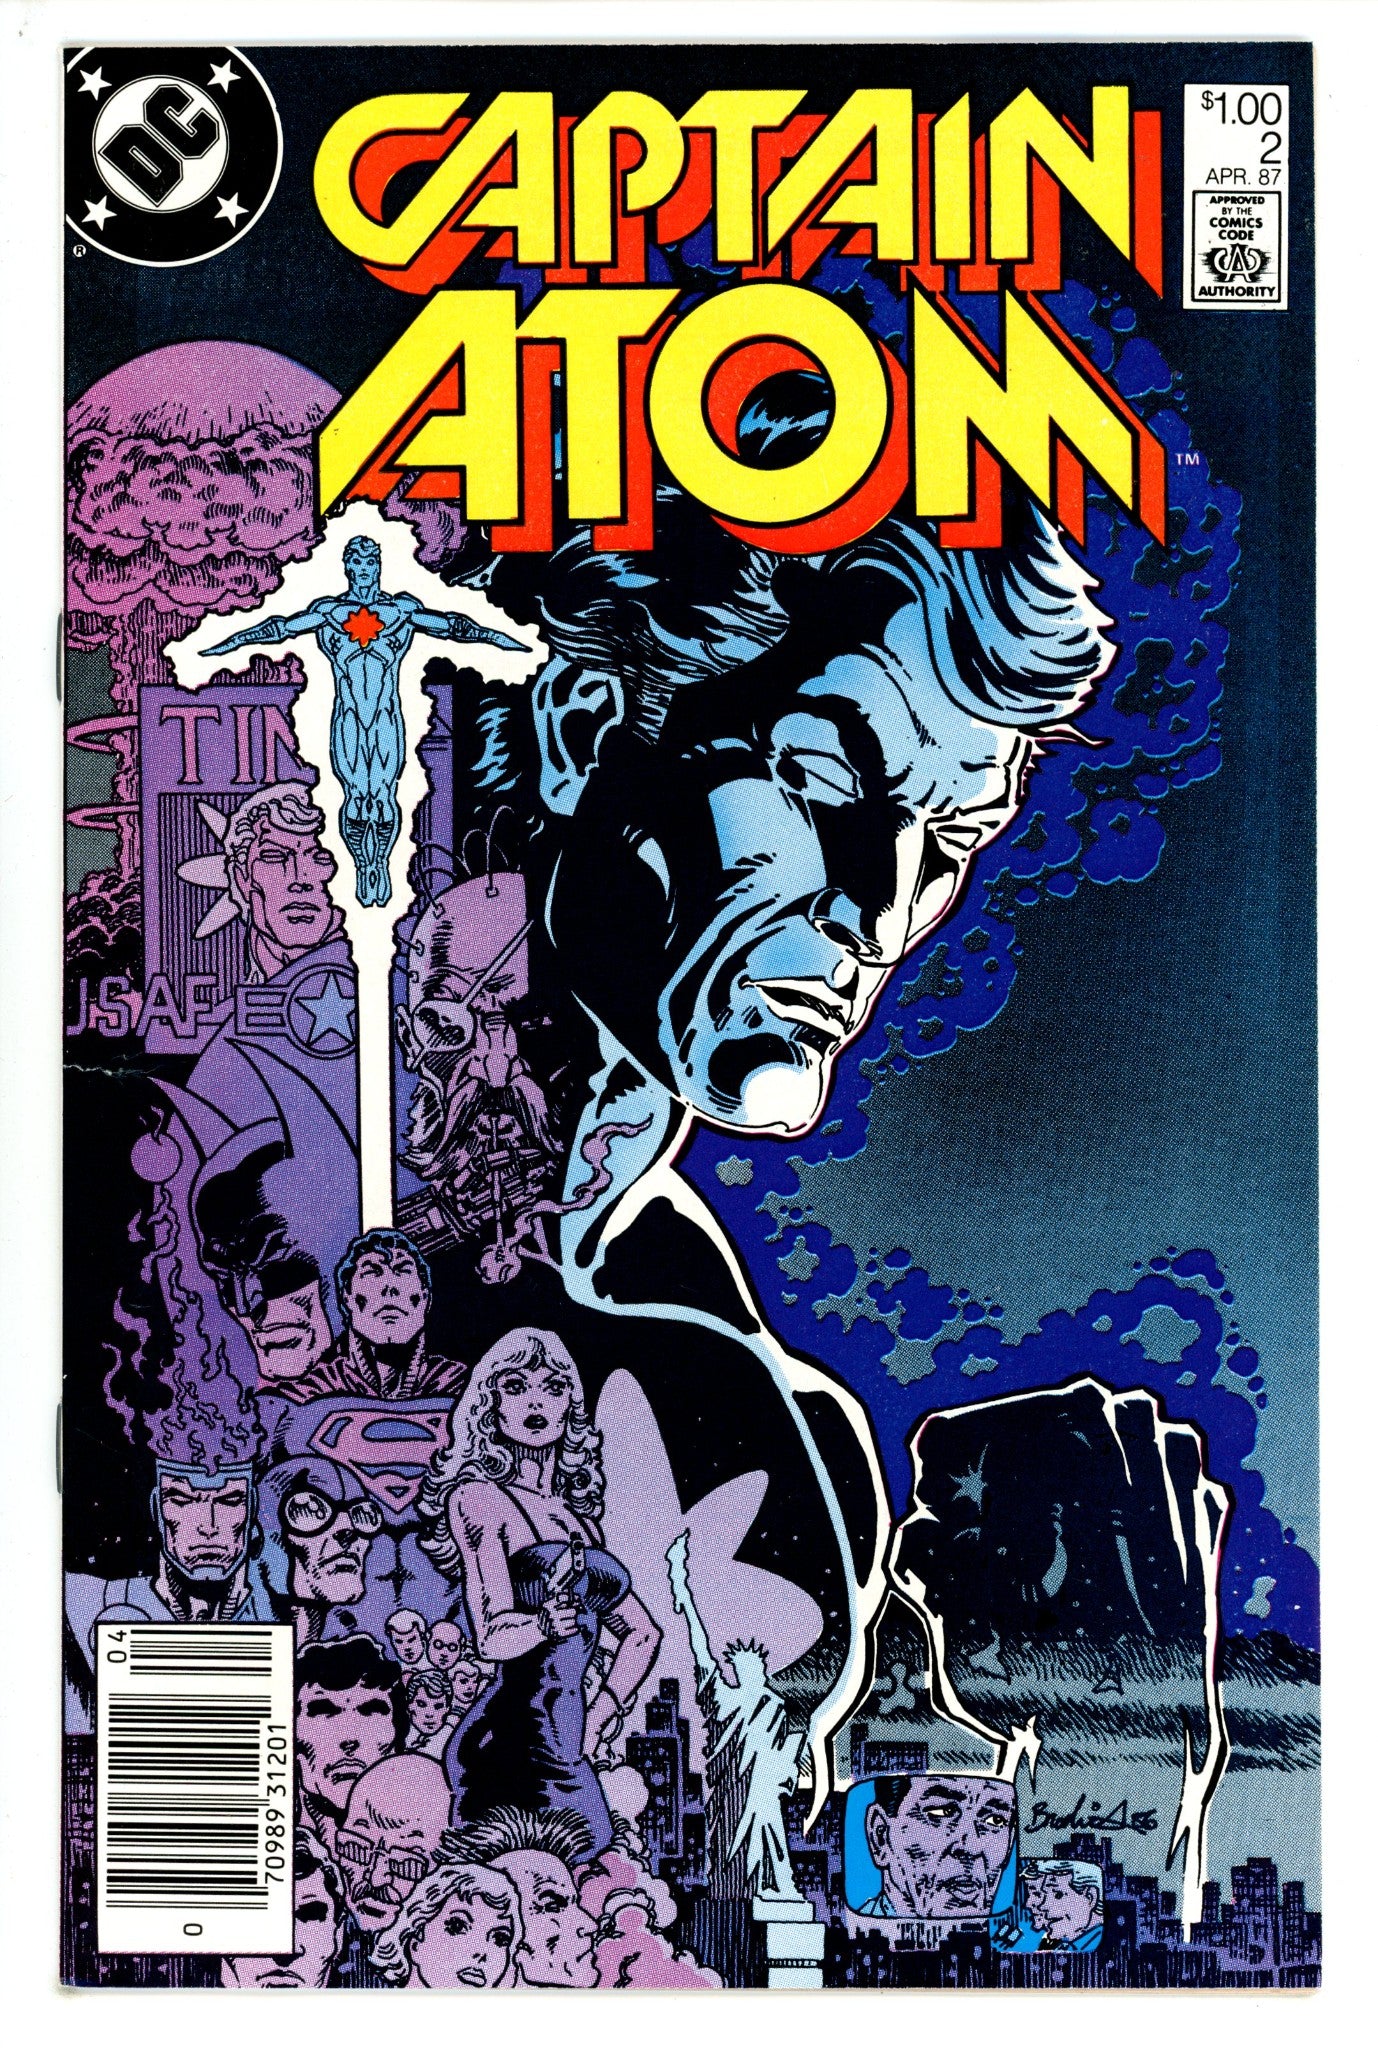 Captain Atom Vol 3 2 Canadian Variant FN/VF (1987)